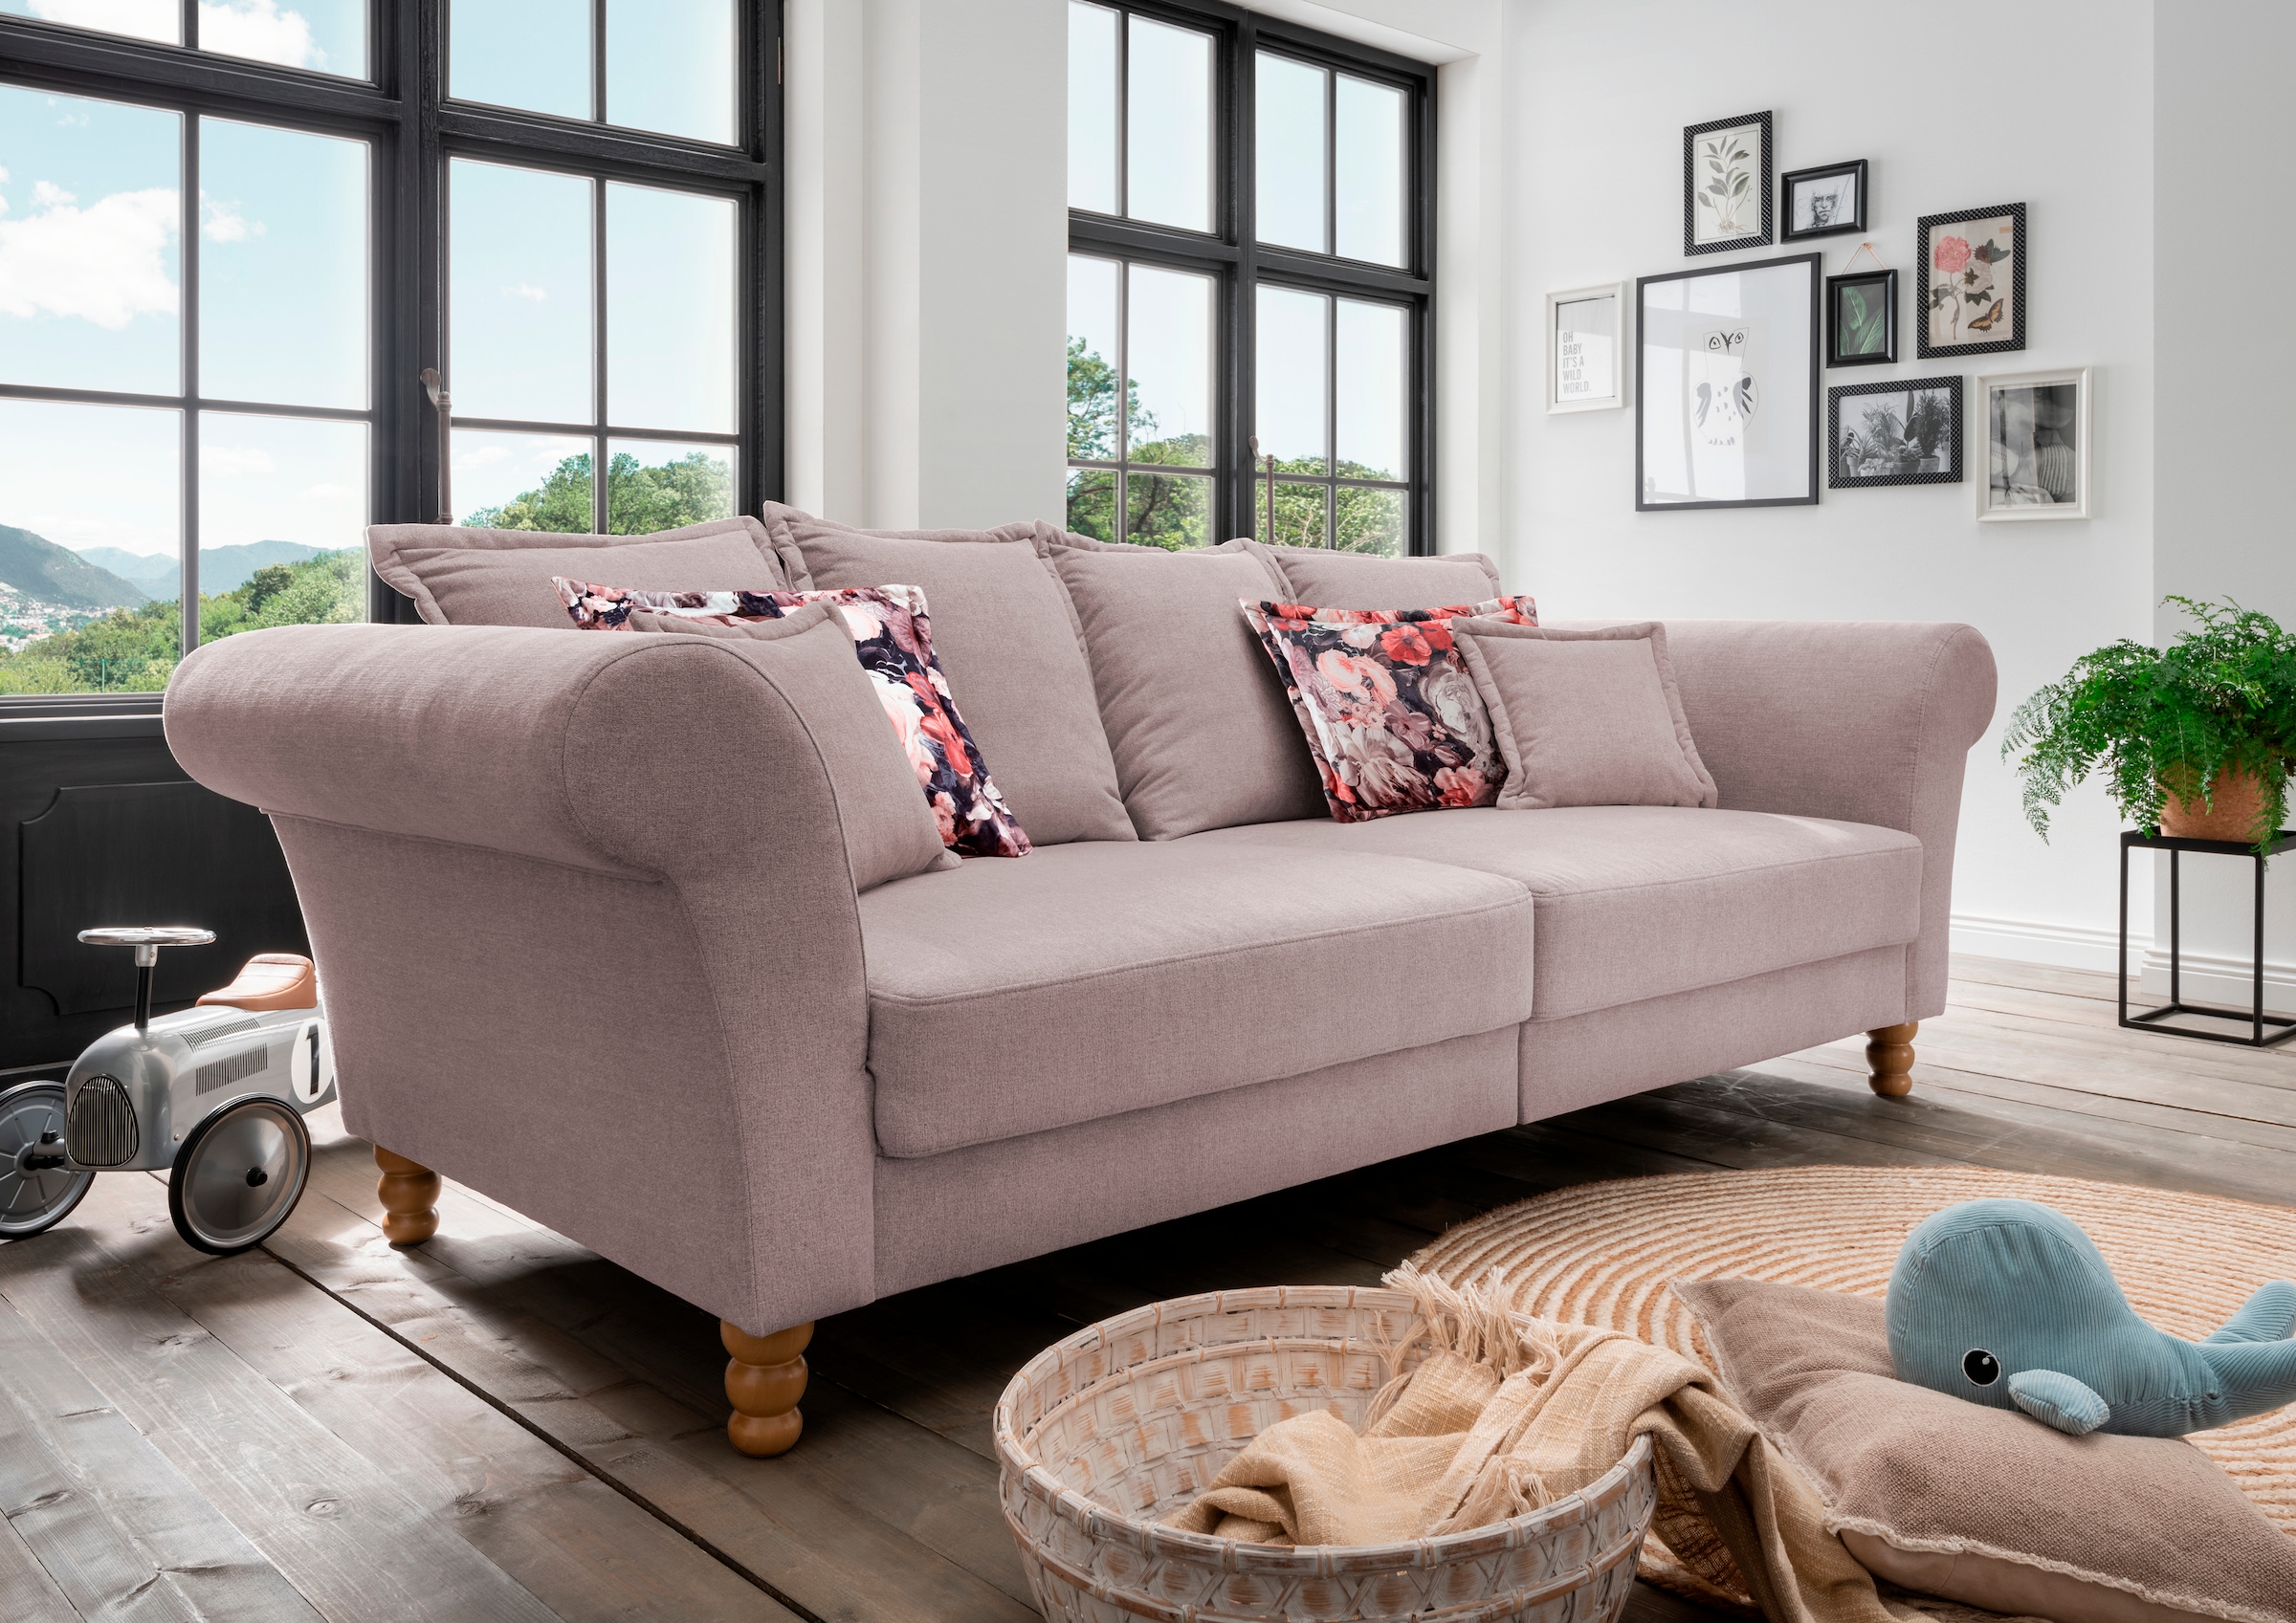 Home kaufen affaire bei OTTO »Tassilo« Big-Sofa